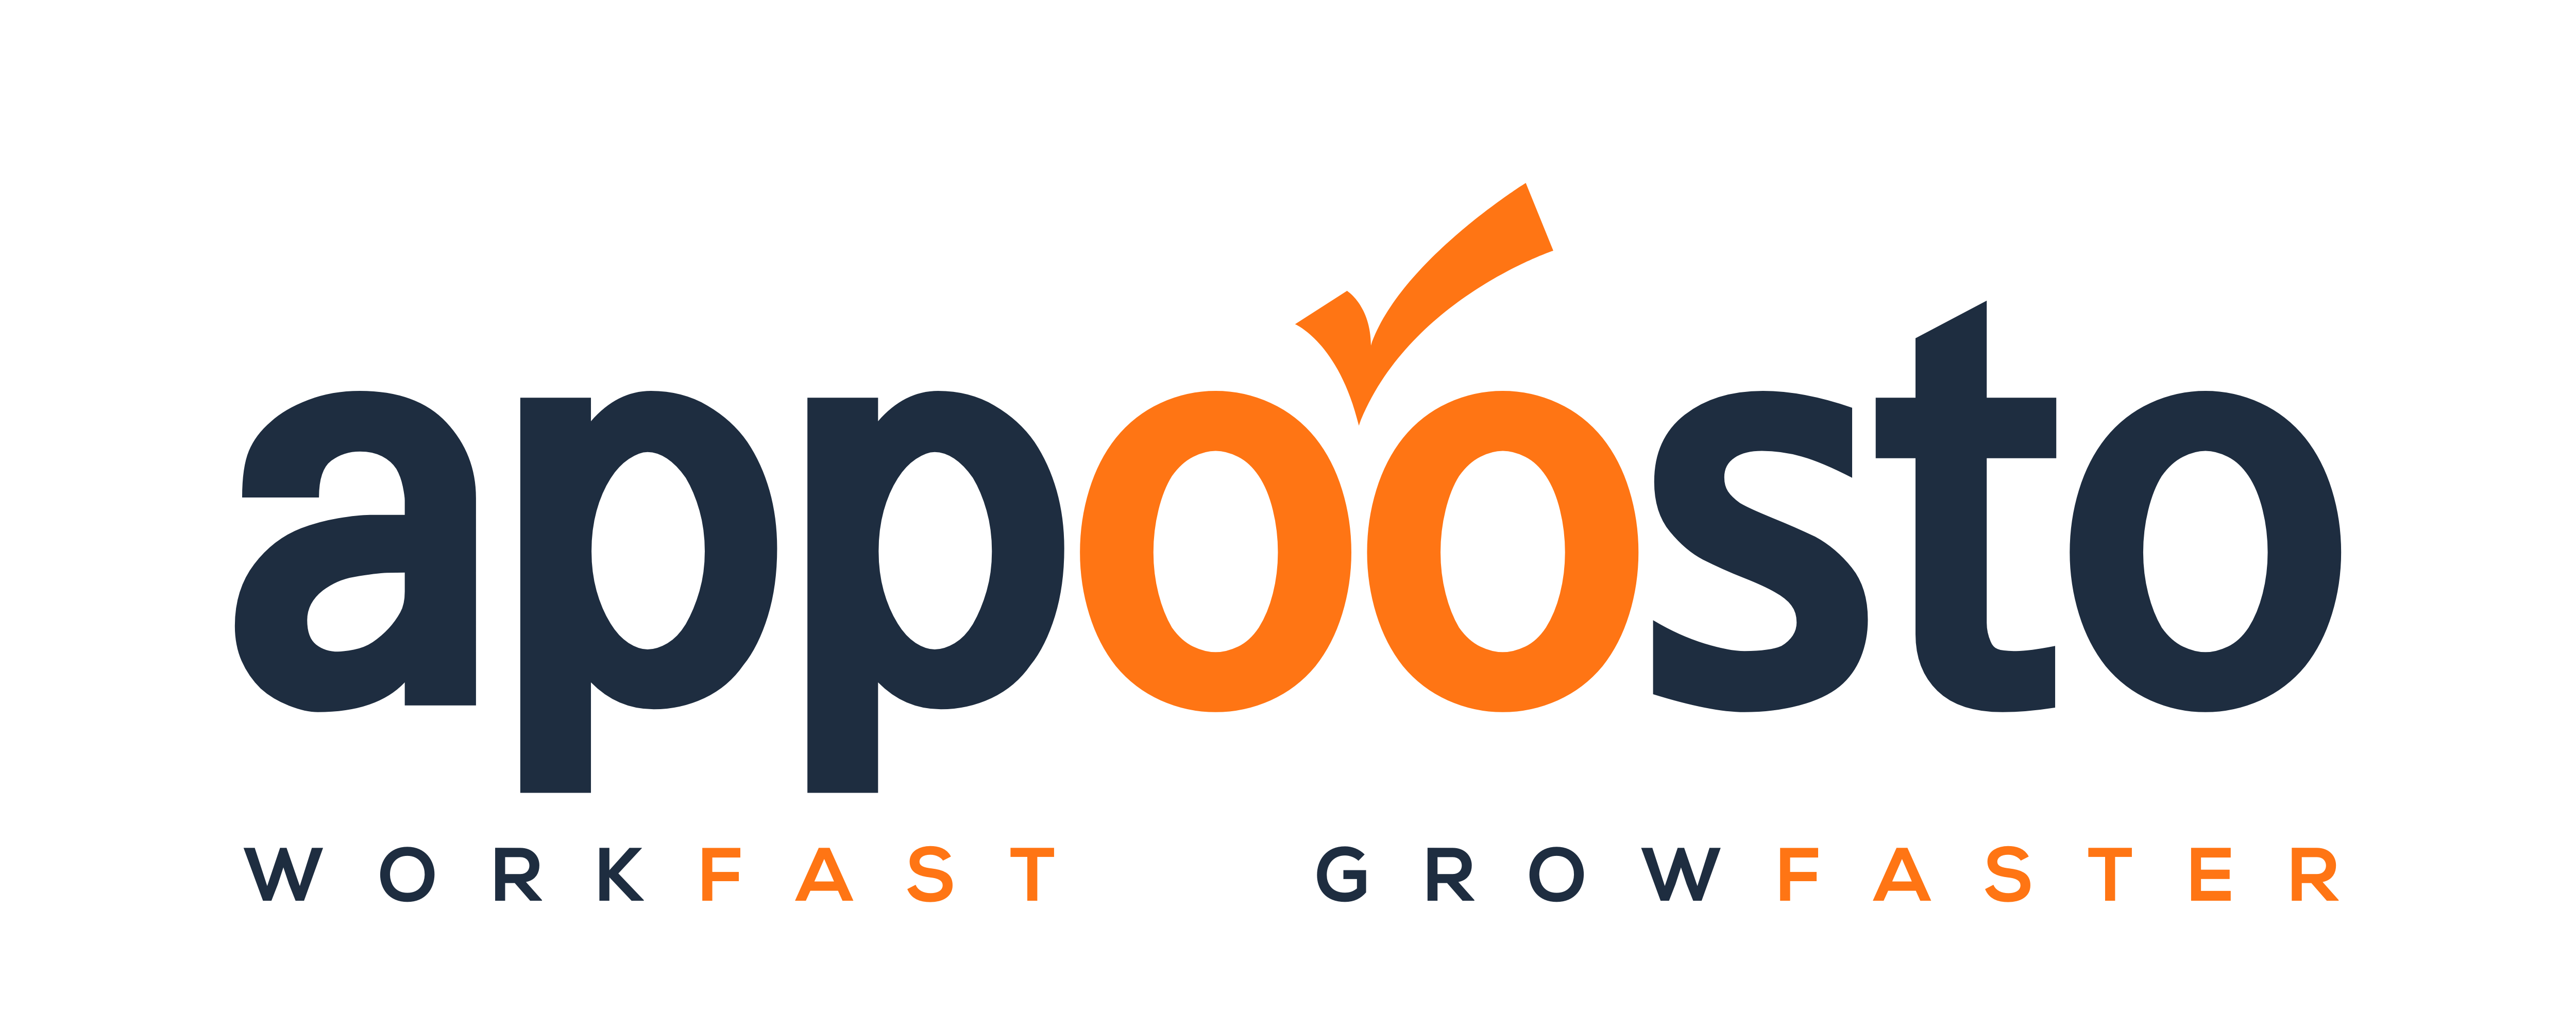 appoosto logo